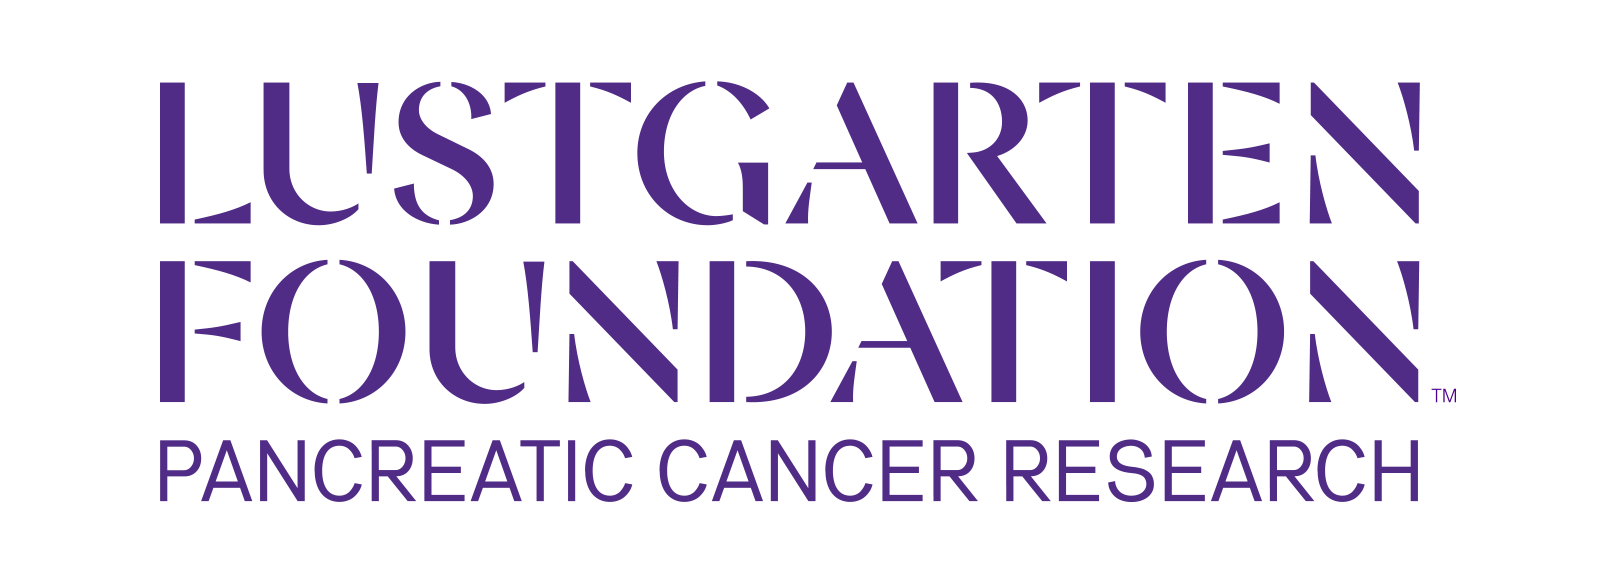 Lustgarten Foundation - Cure Pancreatic Cancer